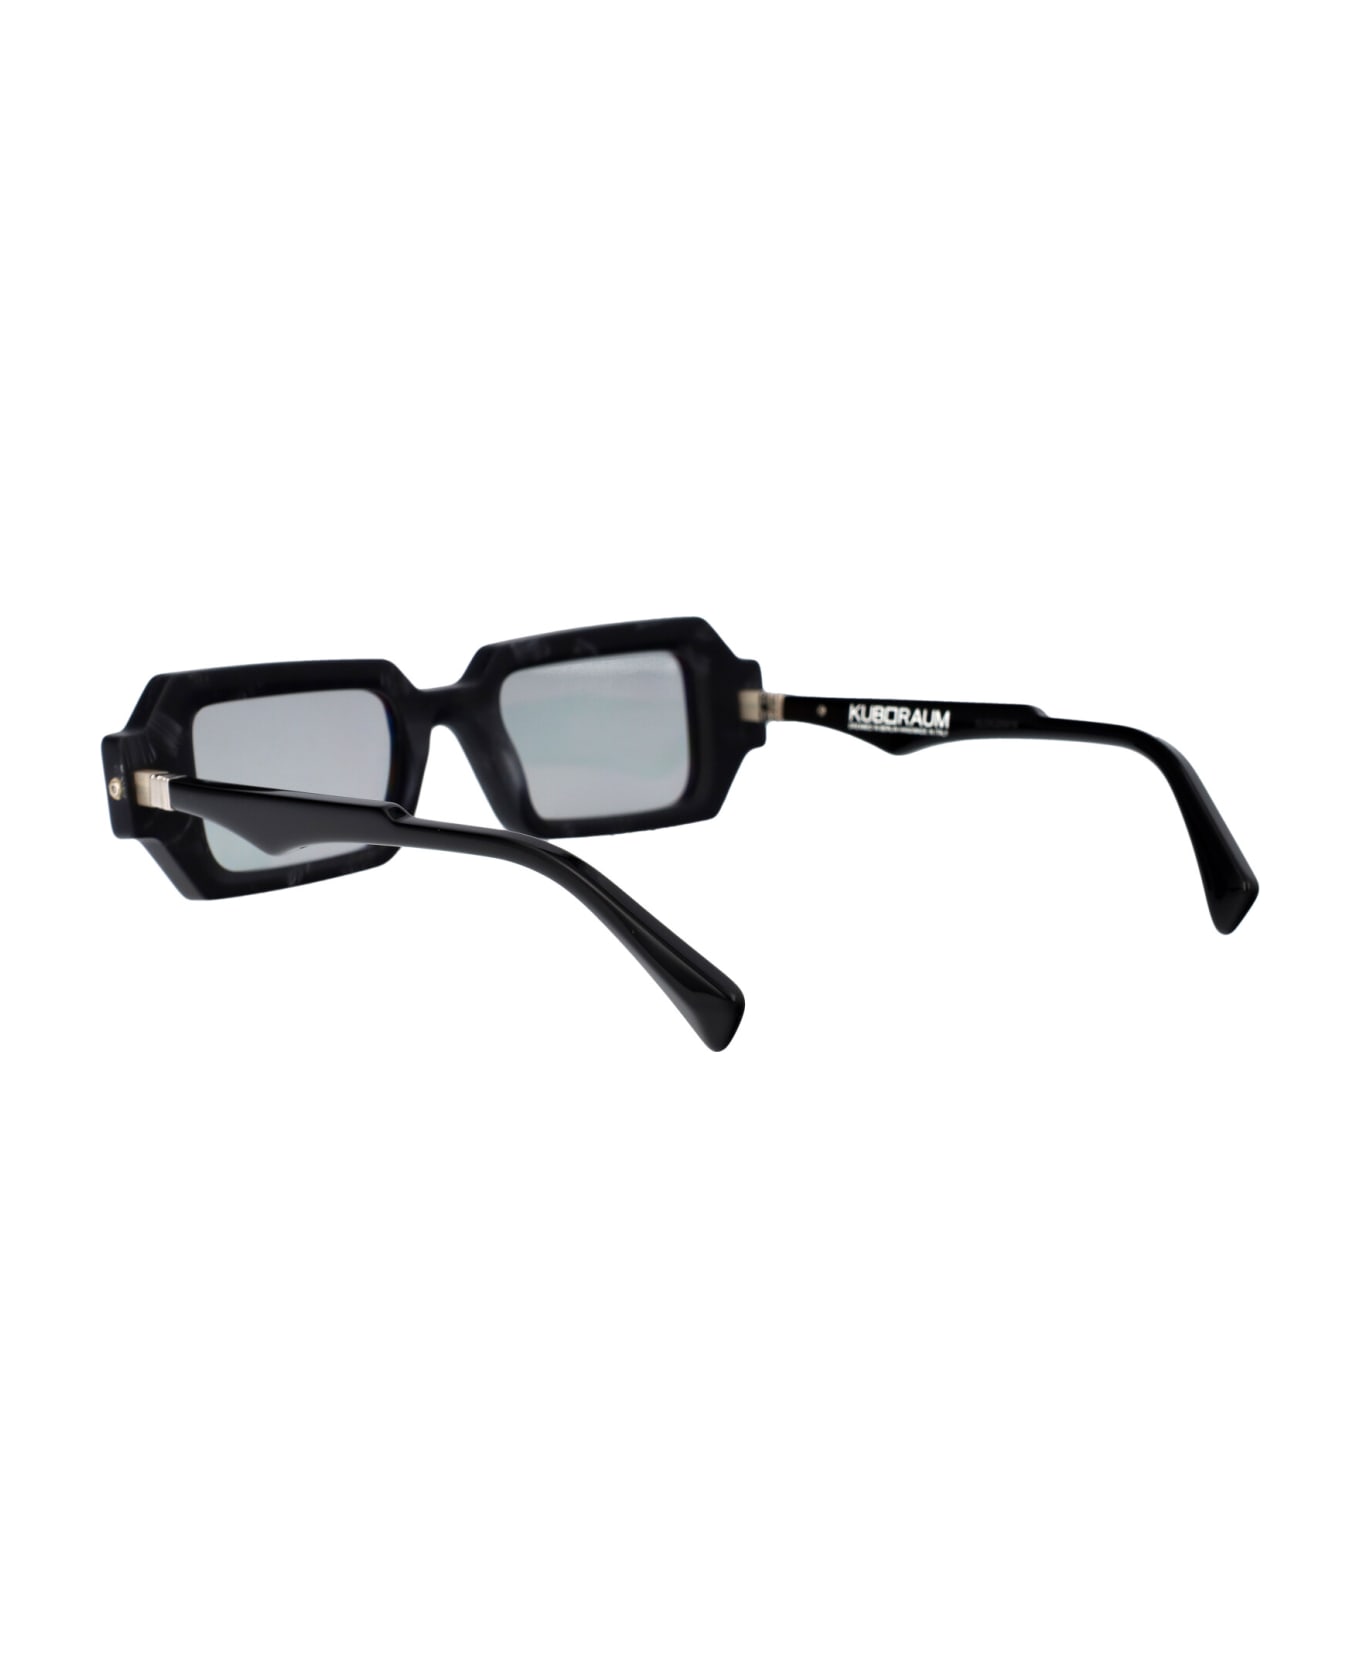 Kuboraum Maske Q9 Sunglasses - BKN black